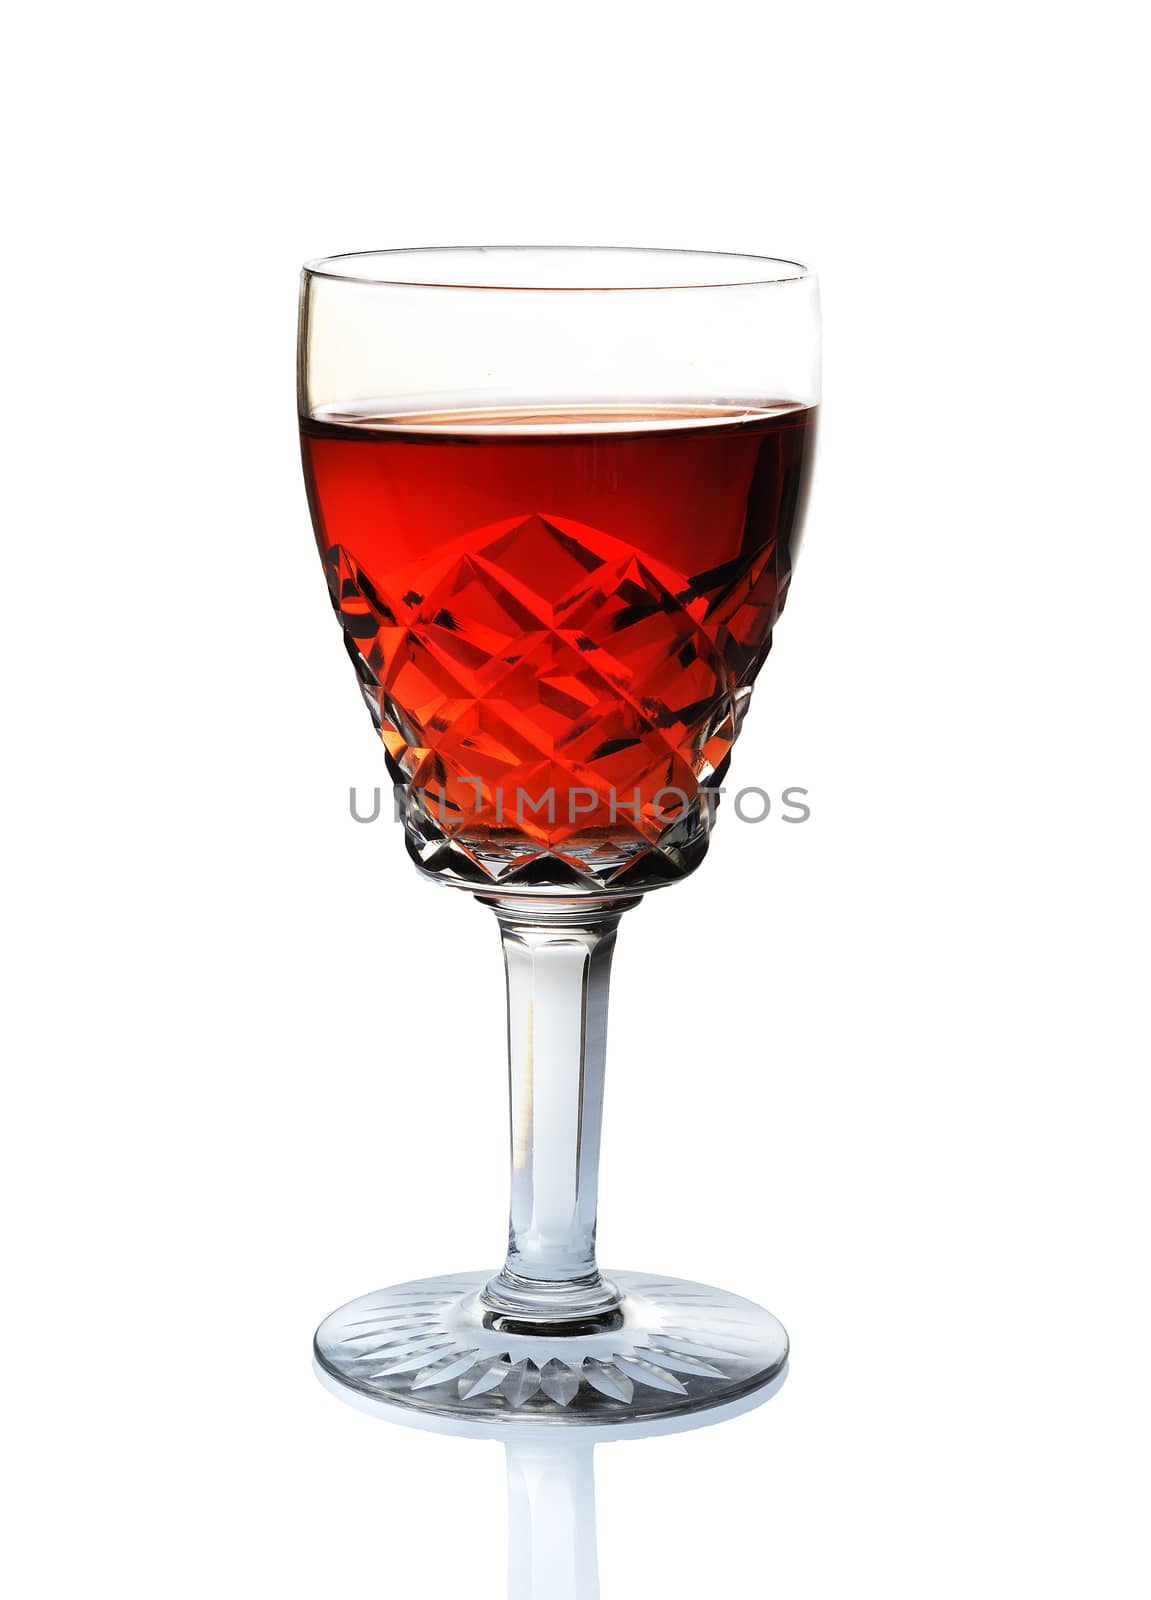 Glass of wine, glass, red wine, white background by jalonsohu@gmail.com